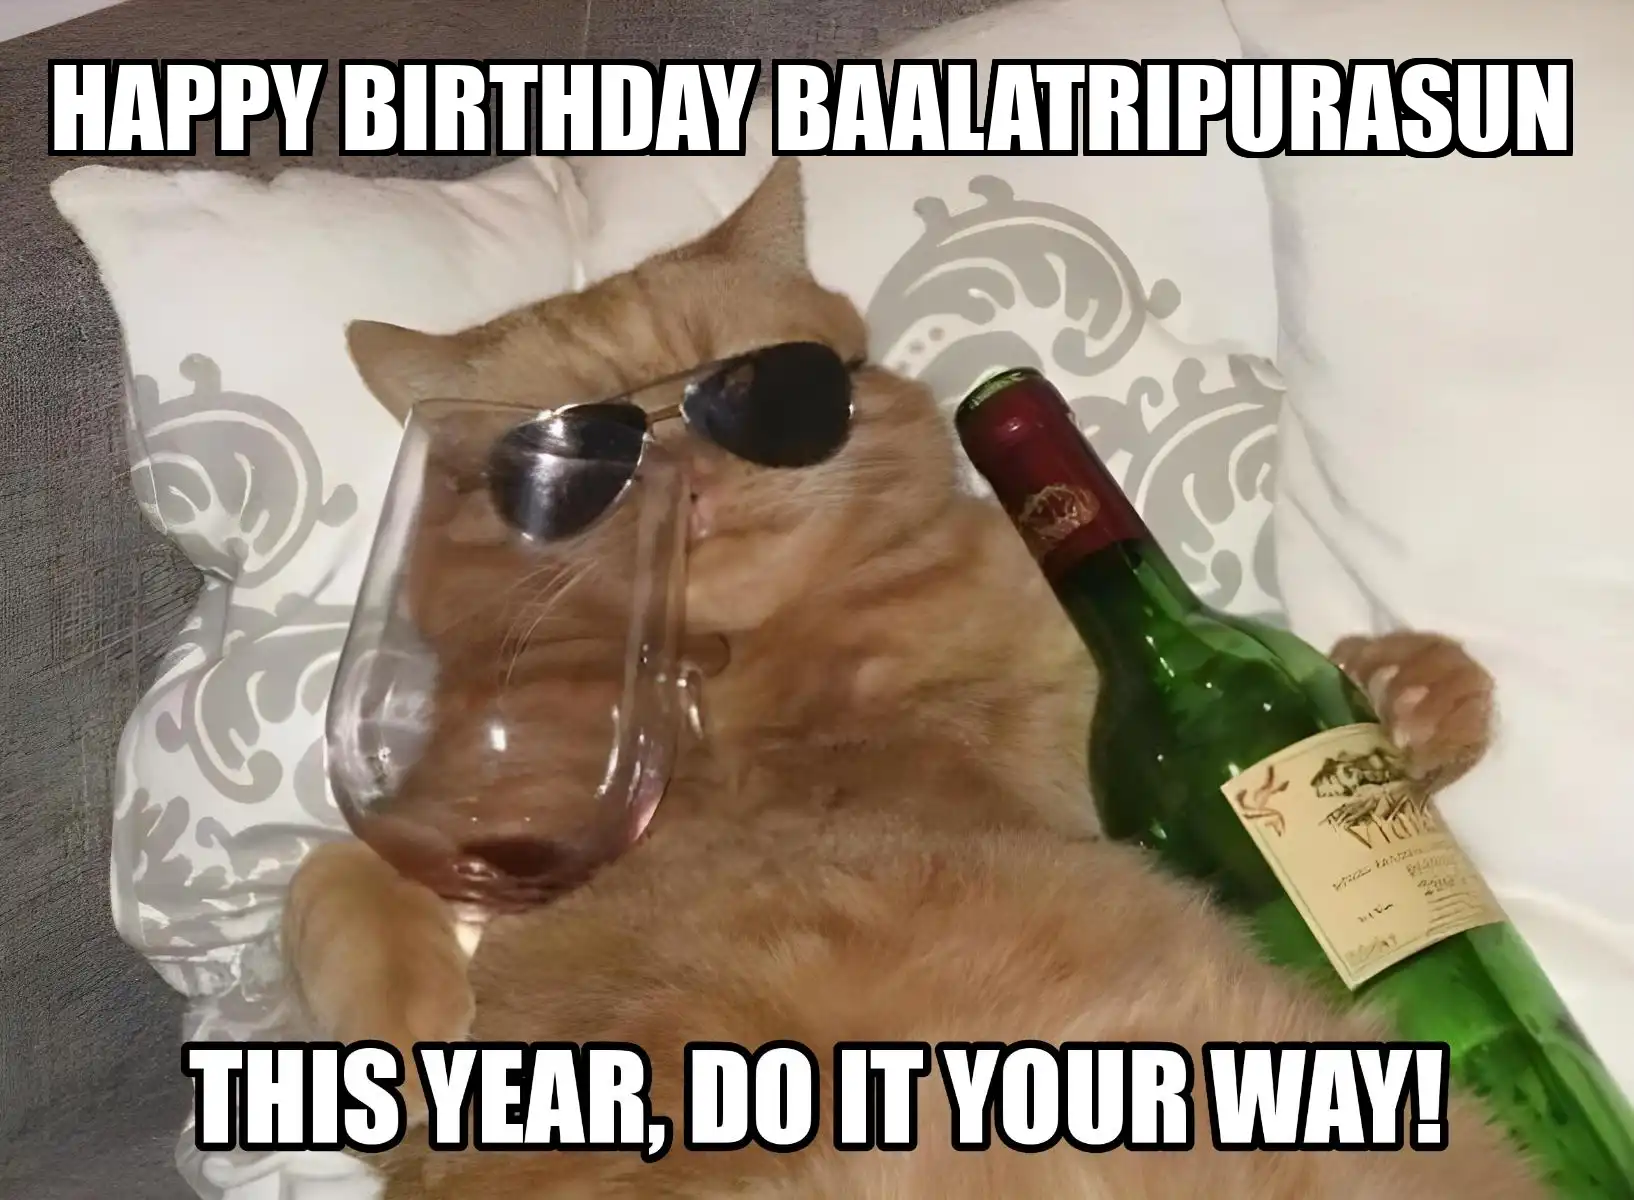 Happy Birthday Baalatripurasun This Year Do It Your Way Meme